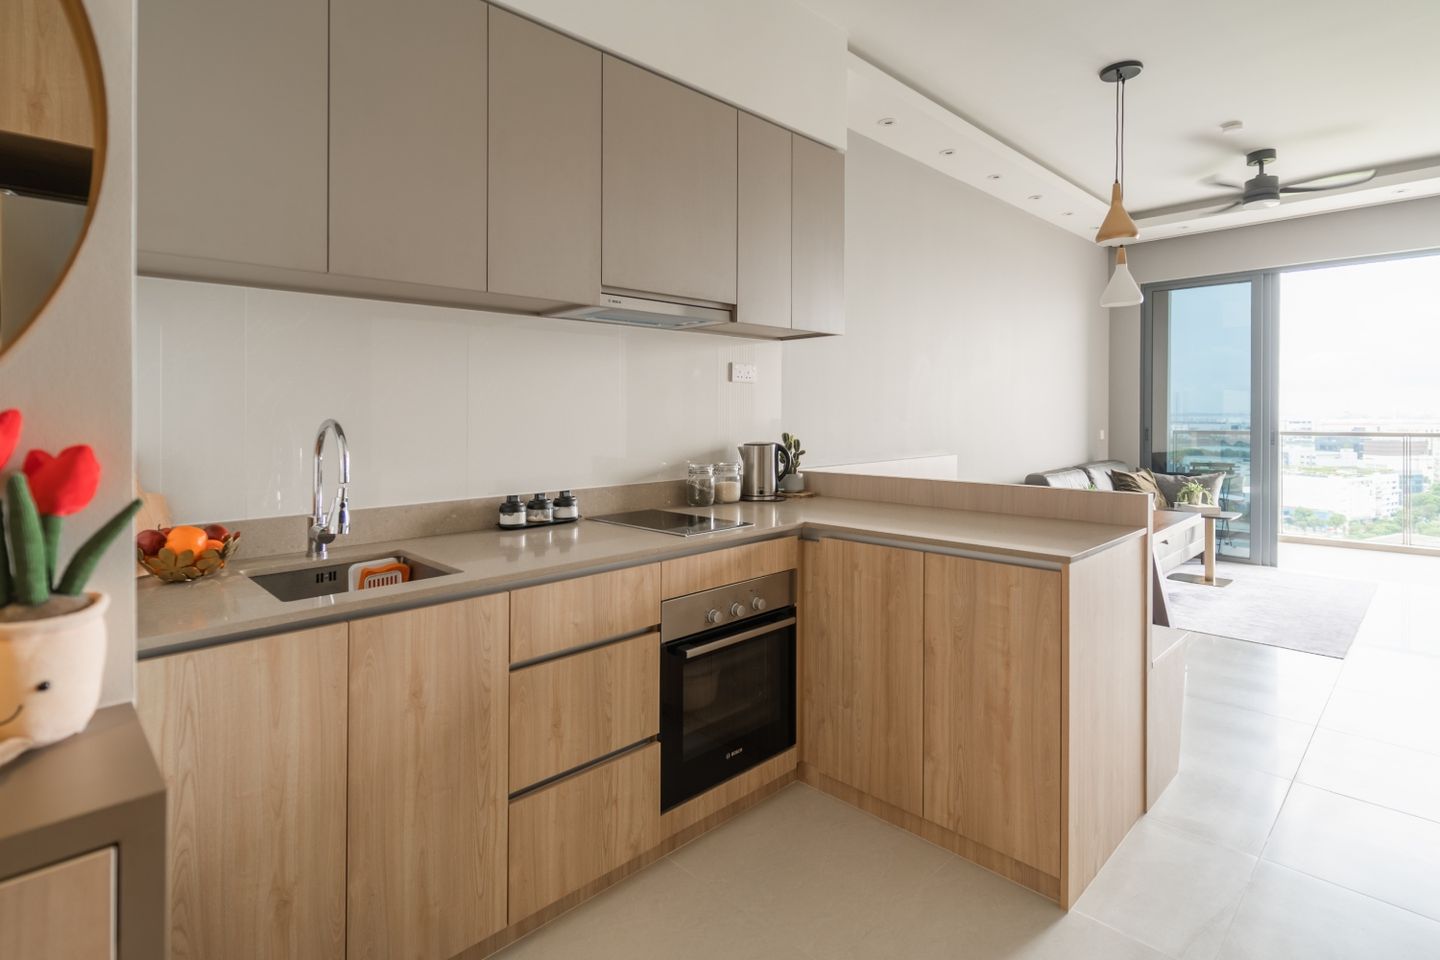 Scandinavian Design For L-Shaped Kitchens - Livspace